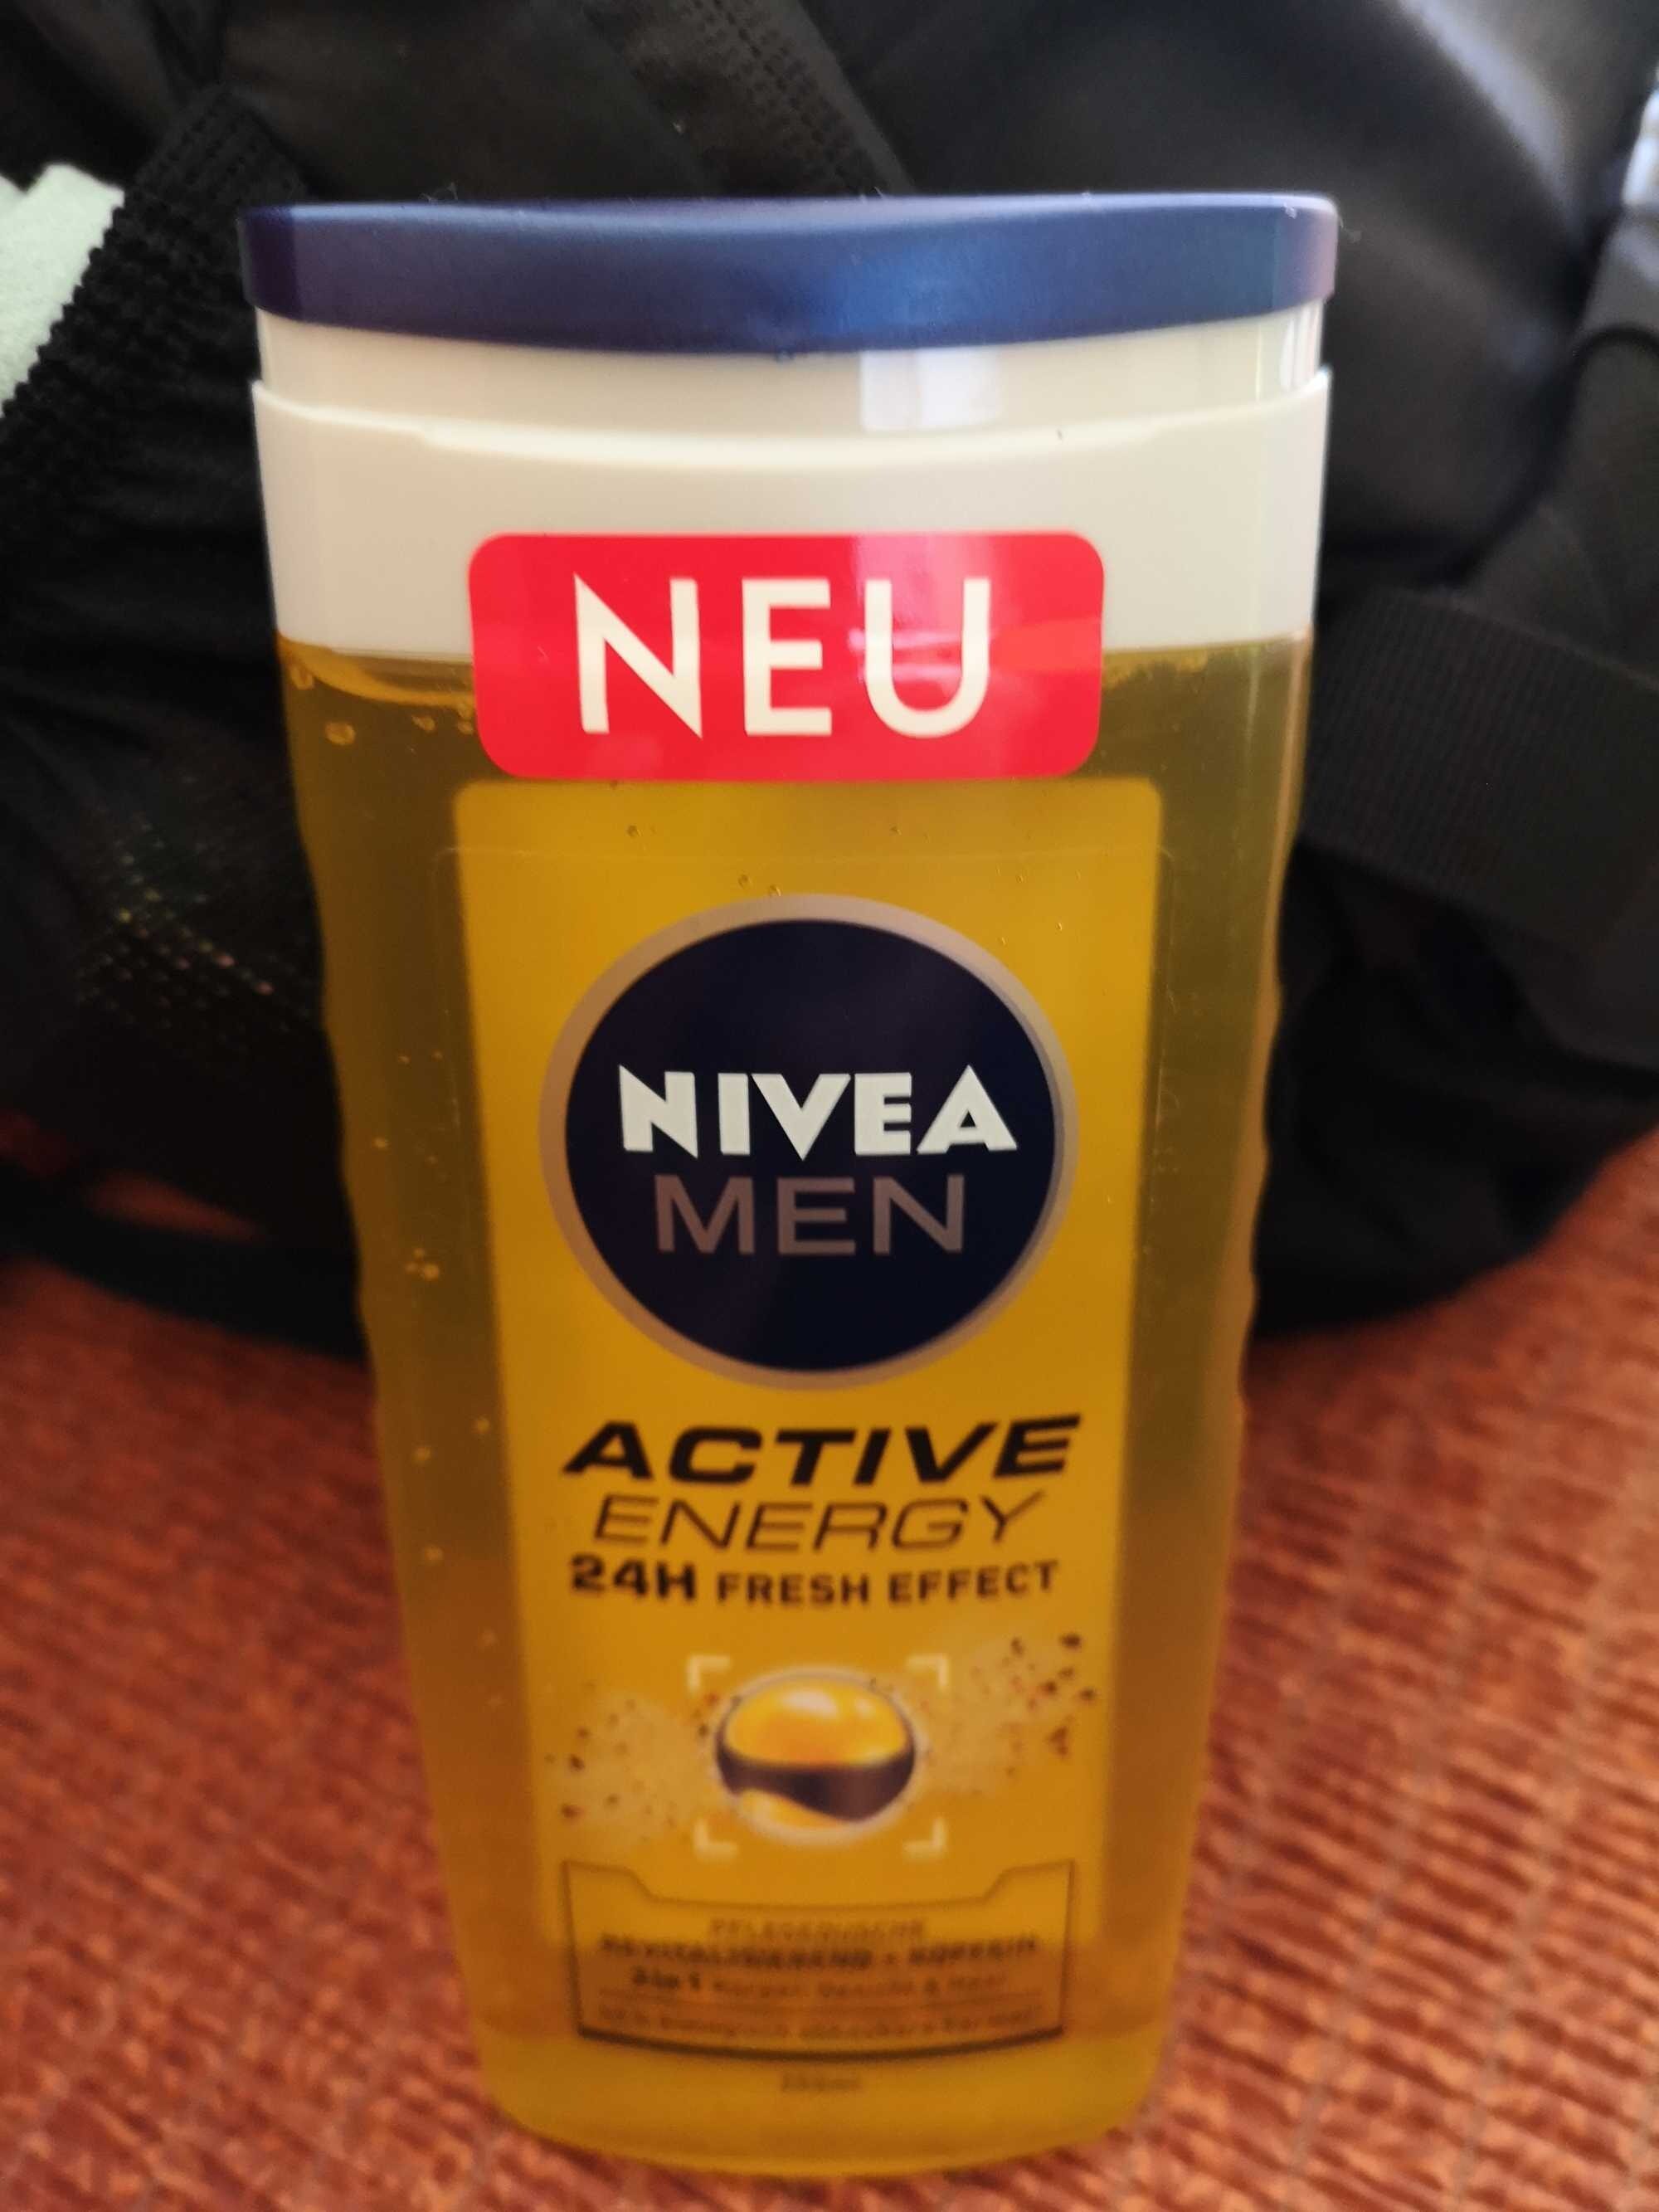 Nivea Men Active Energy 24h Fresh Effect - 製品 - de